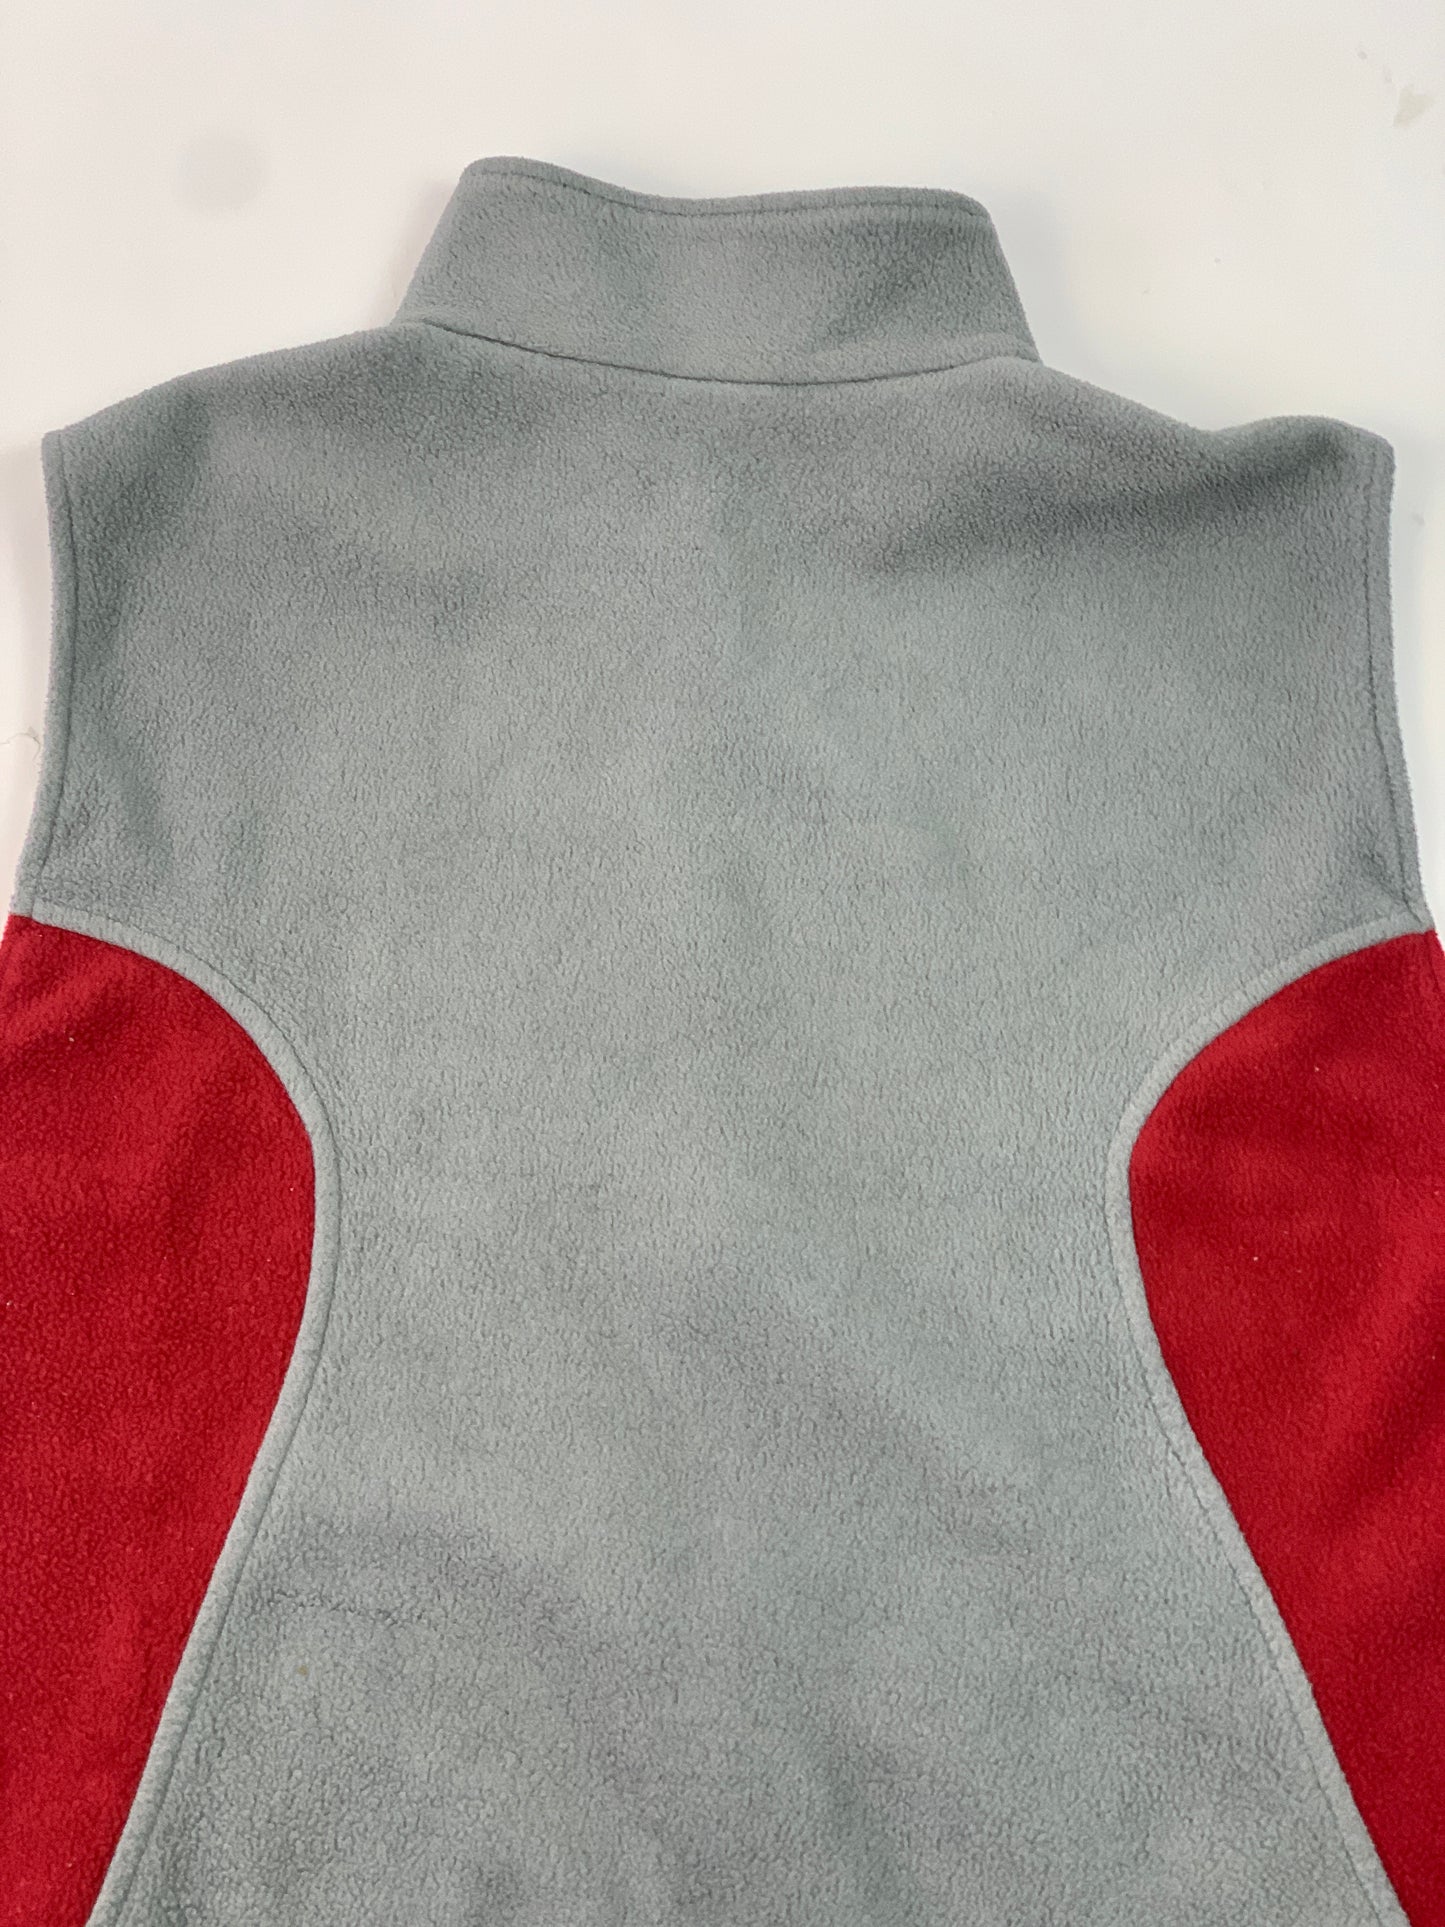 Oakley Fleece Vintage Vest - XL